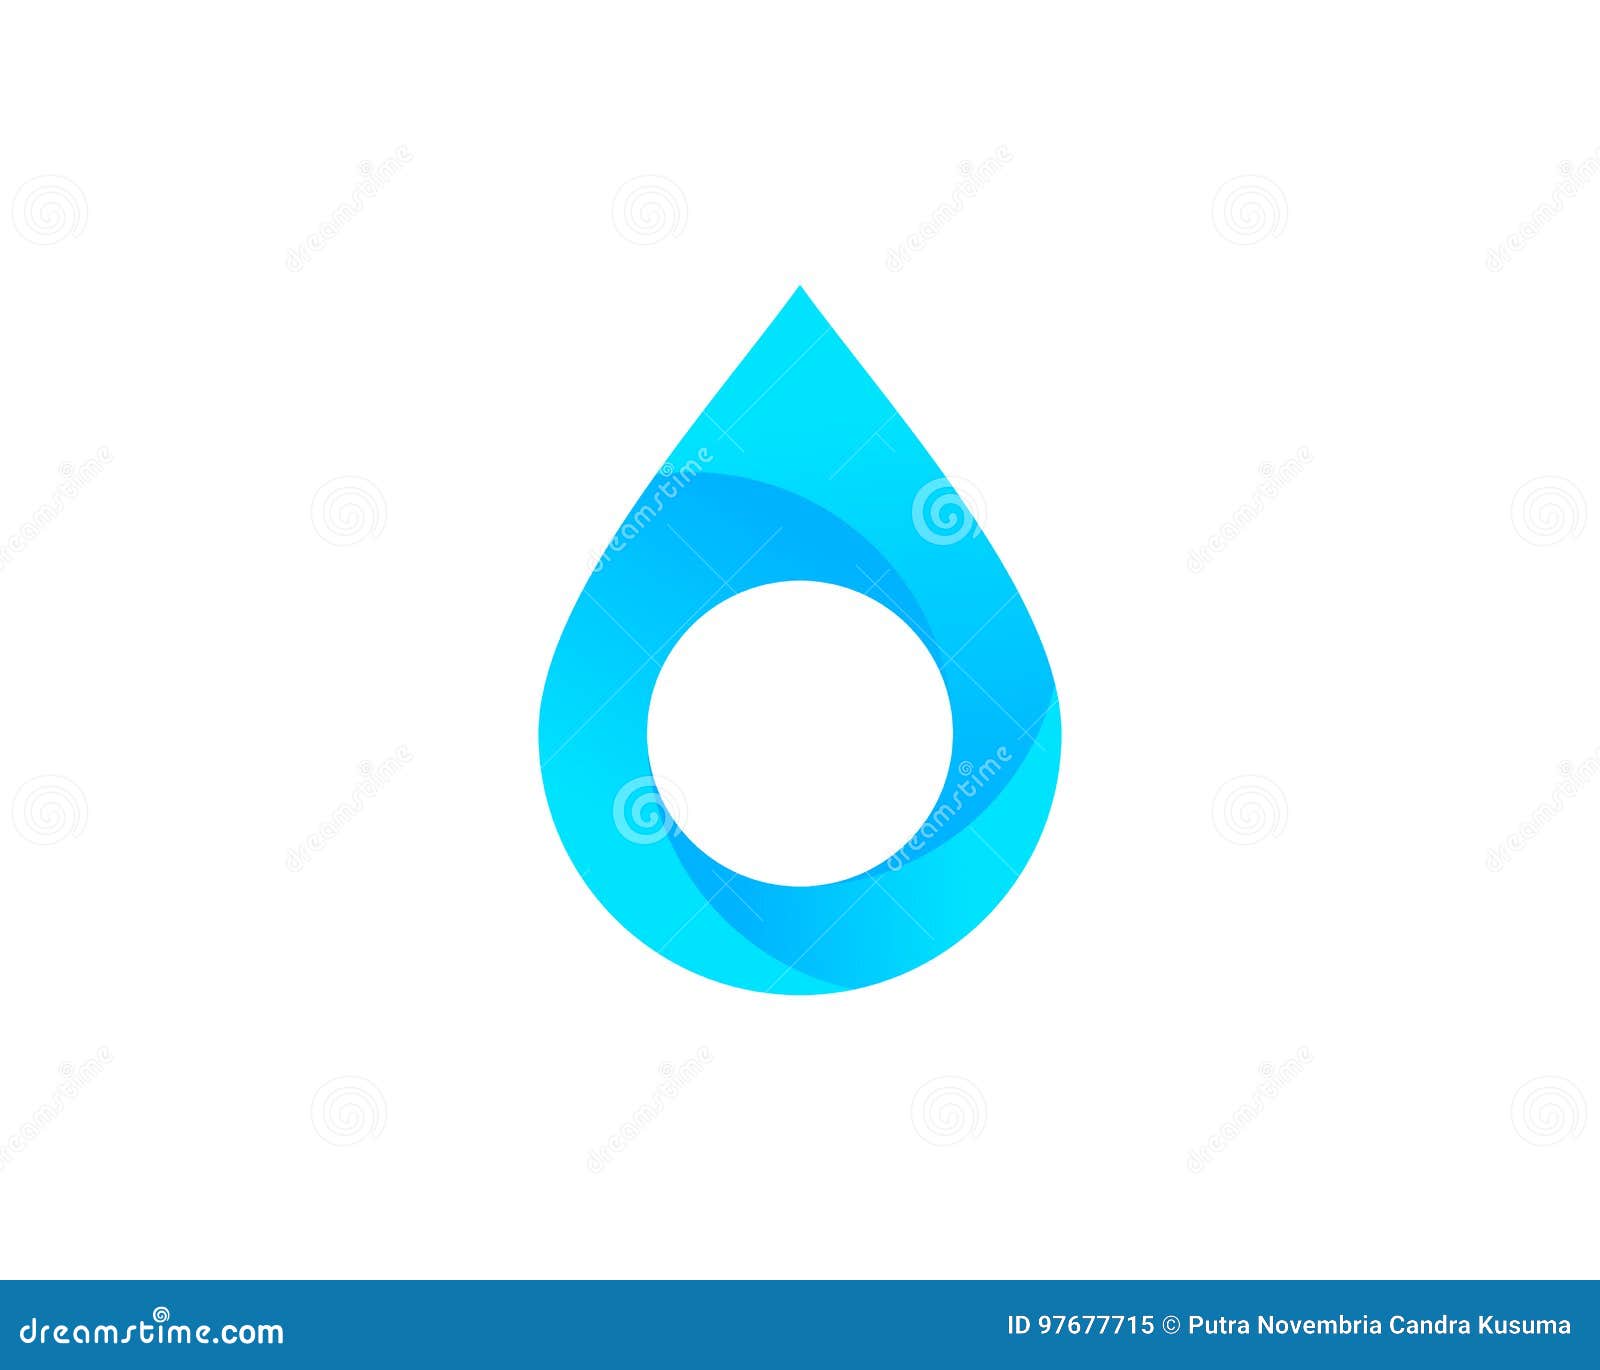 Drop message. Water logo Design. Rare Water logo.